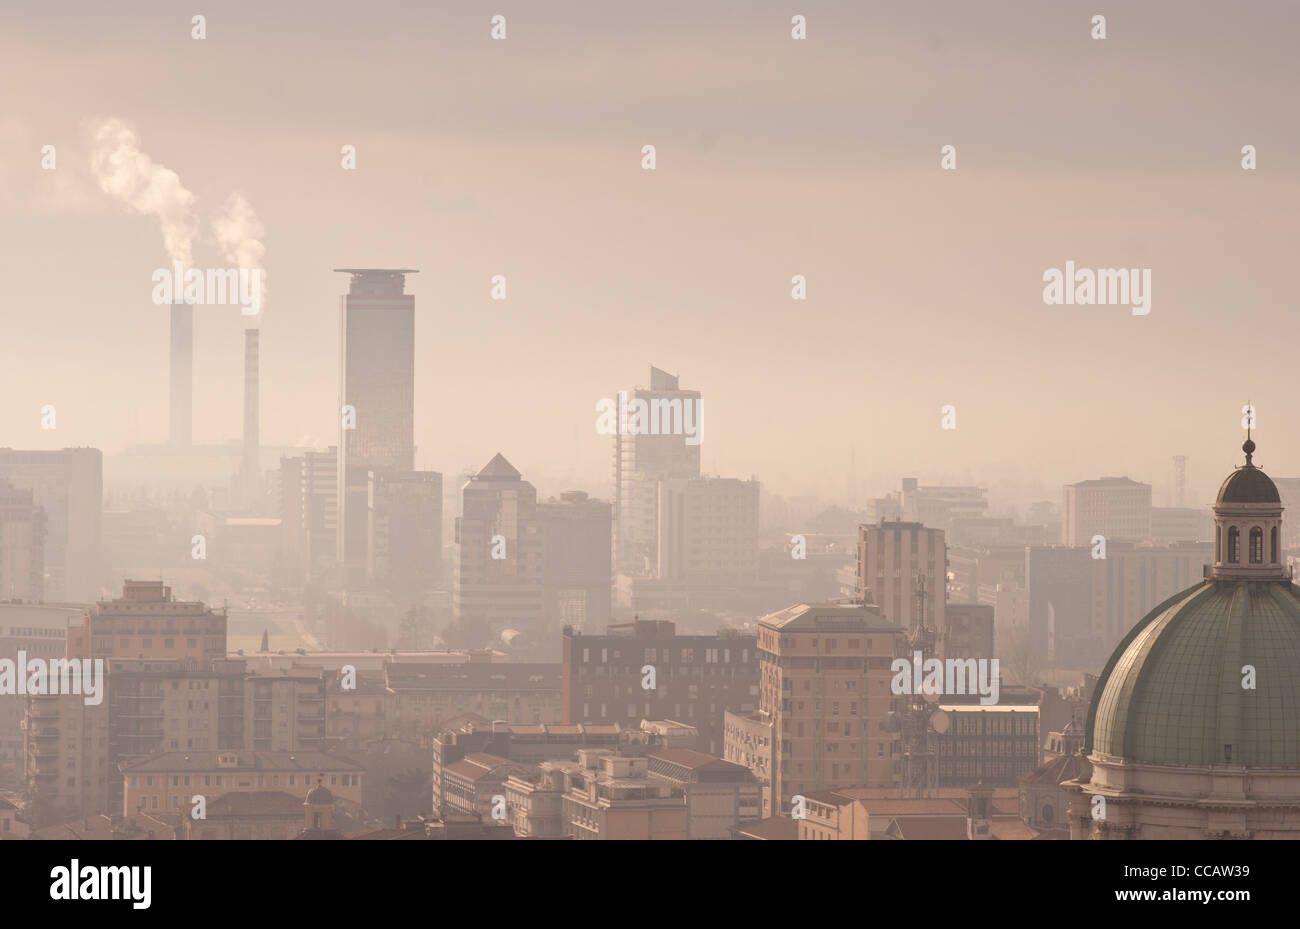 Skyline of a city with smokestaks and smog Stock Photo